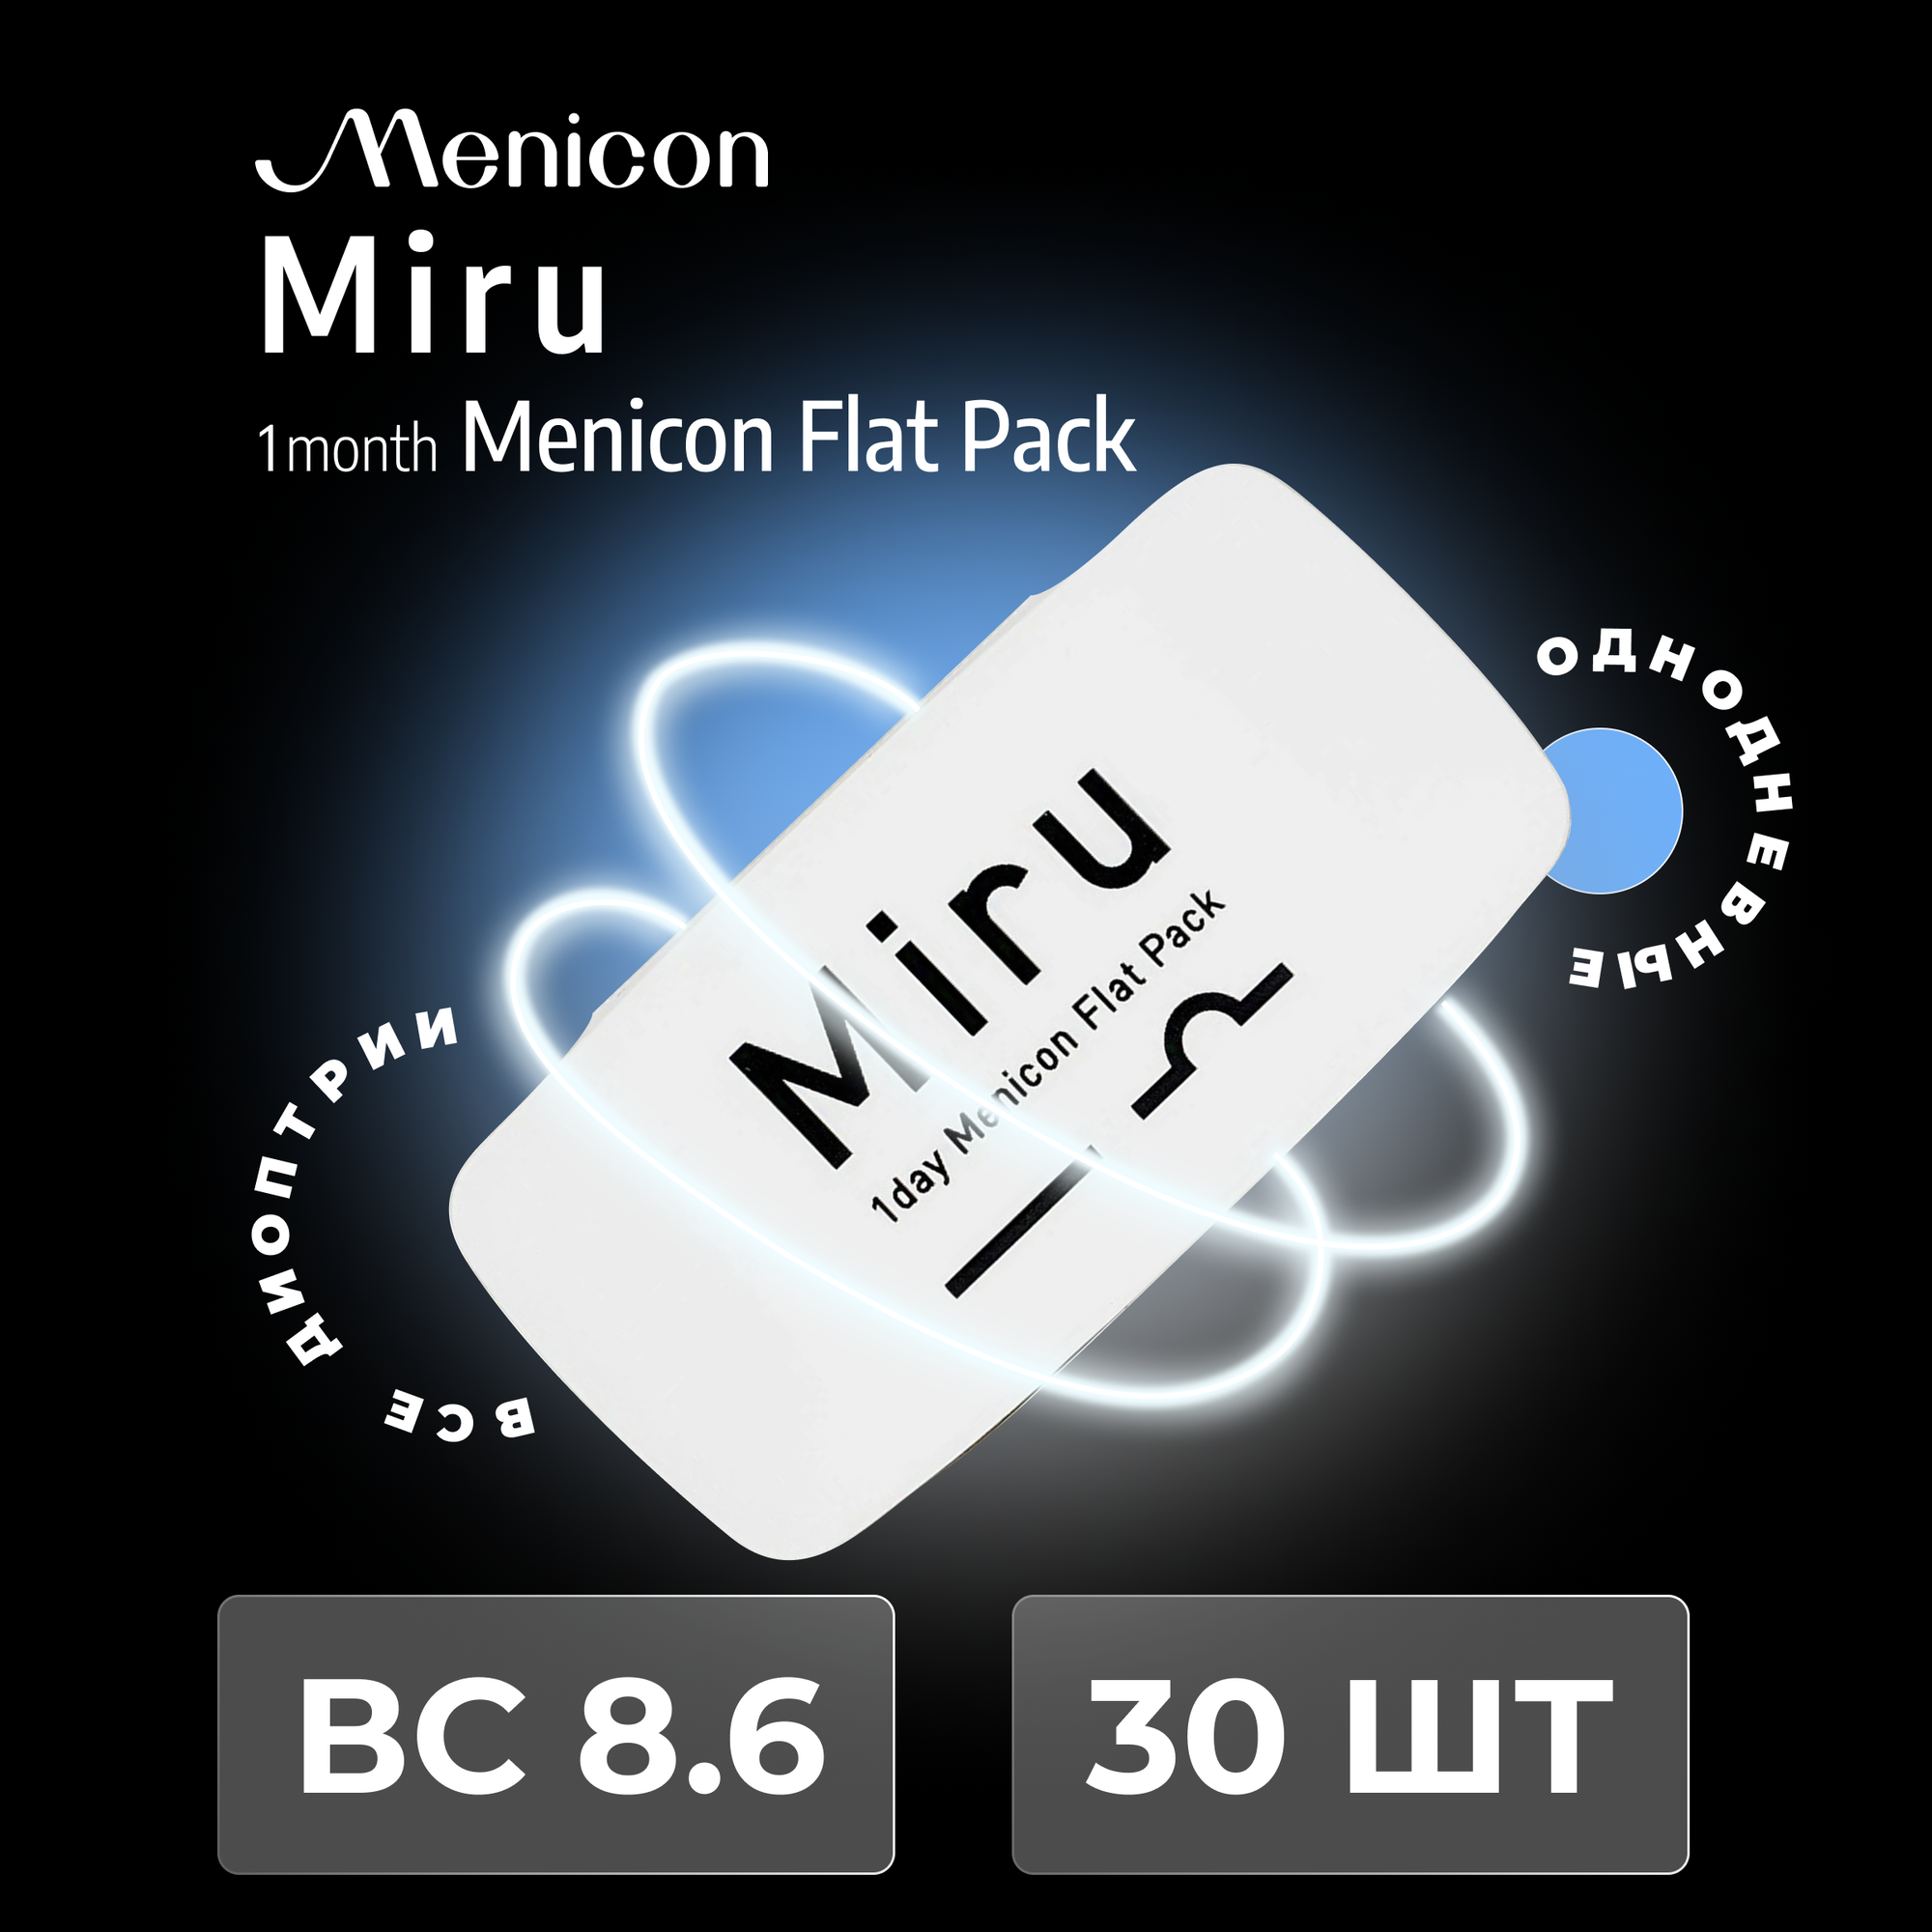 Menicon Miru 1day Flat Pack(30 линз) -6.00 R 8.6